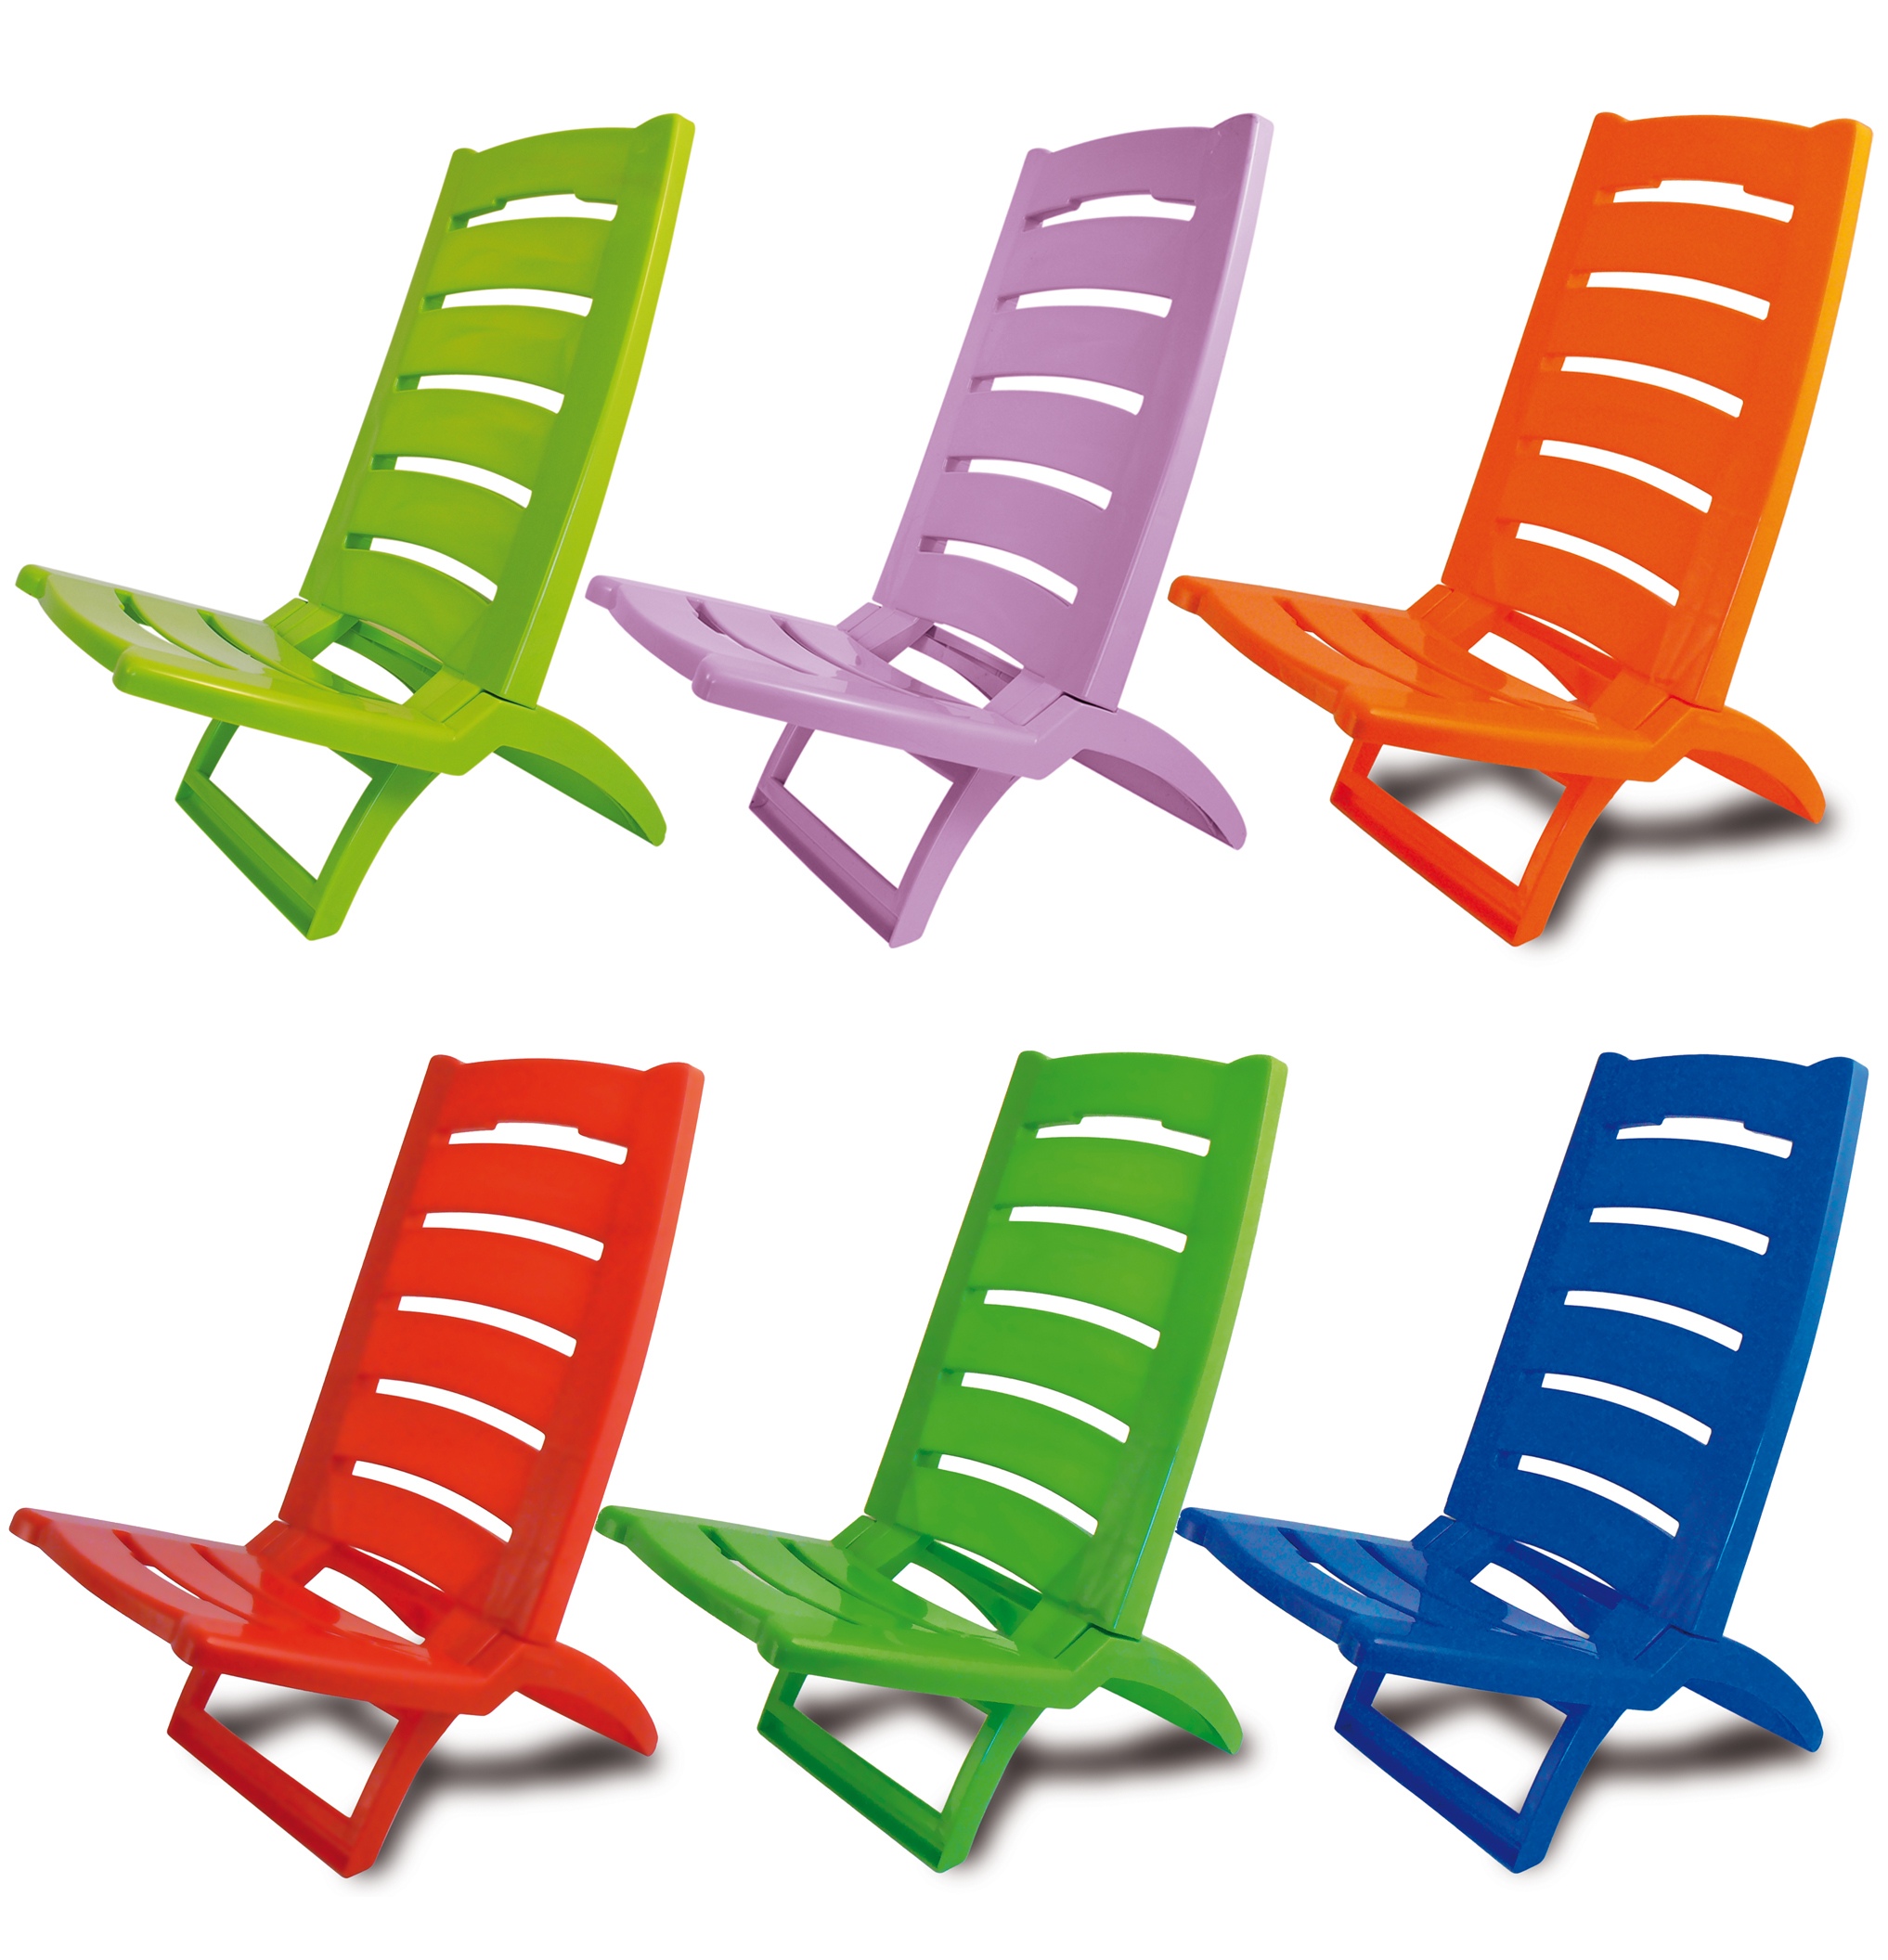 Plastic Portable Folding Low Beach Chairs Coloured Garden